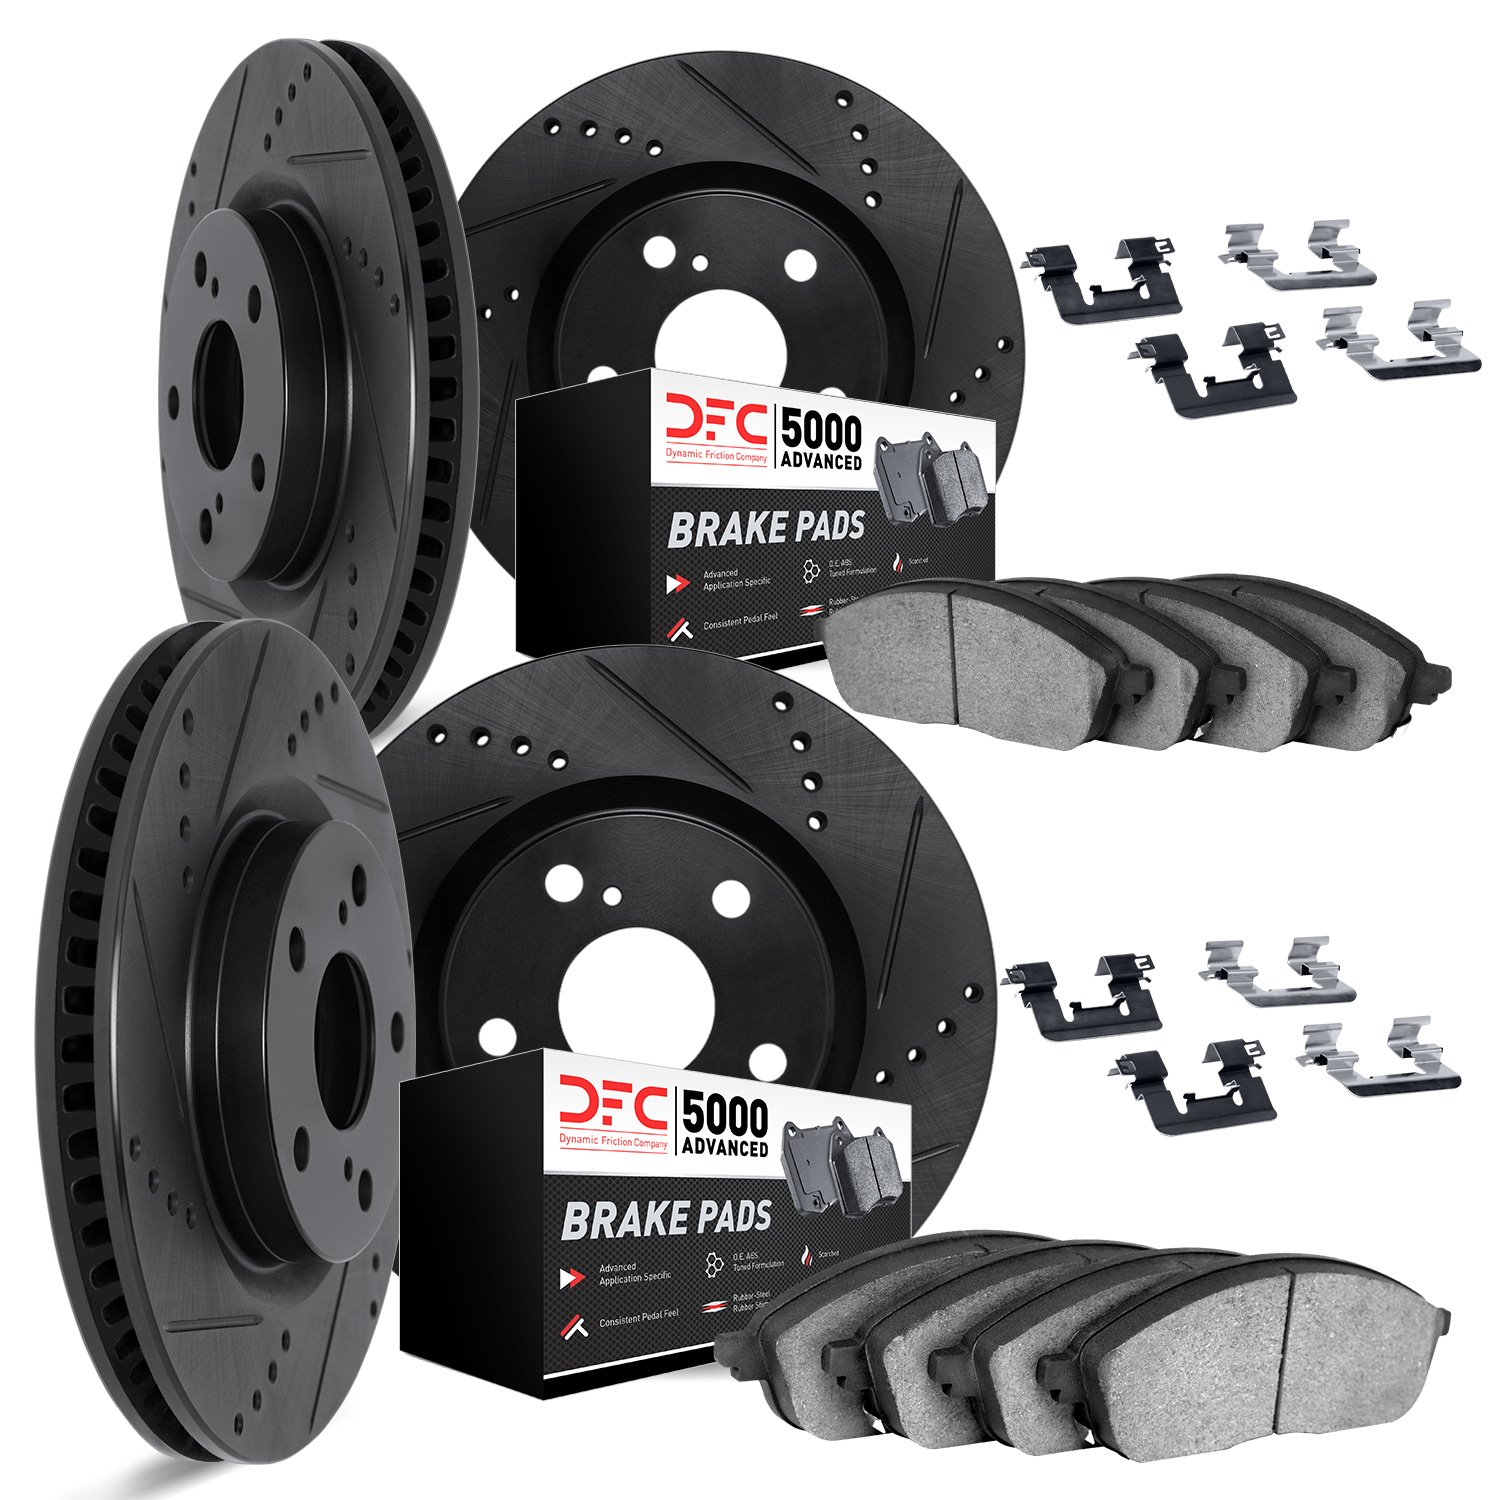 8514-67064 Drilled/Slotted Brake Rotors w/5000 Advanced Brake Pads Kit & Hardware [Black], 2008-2013 Infiniti/Nissan, Position: